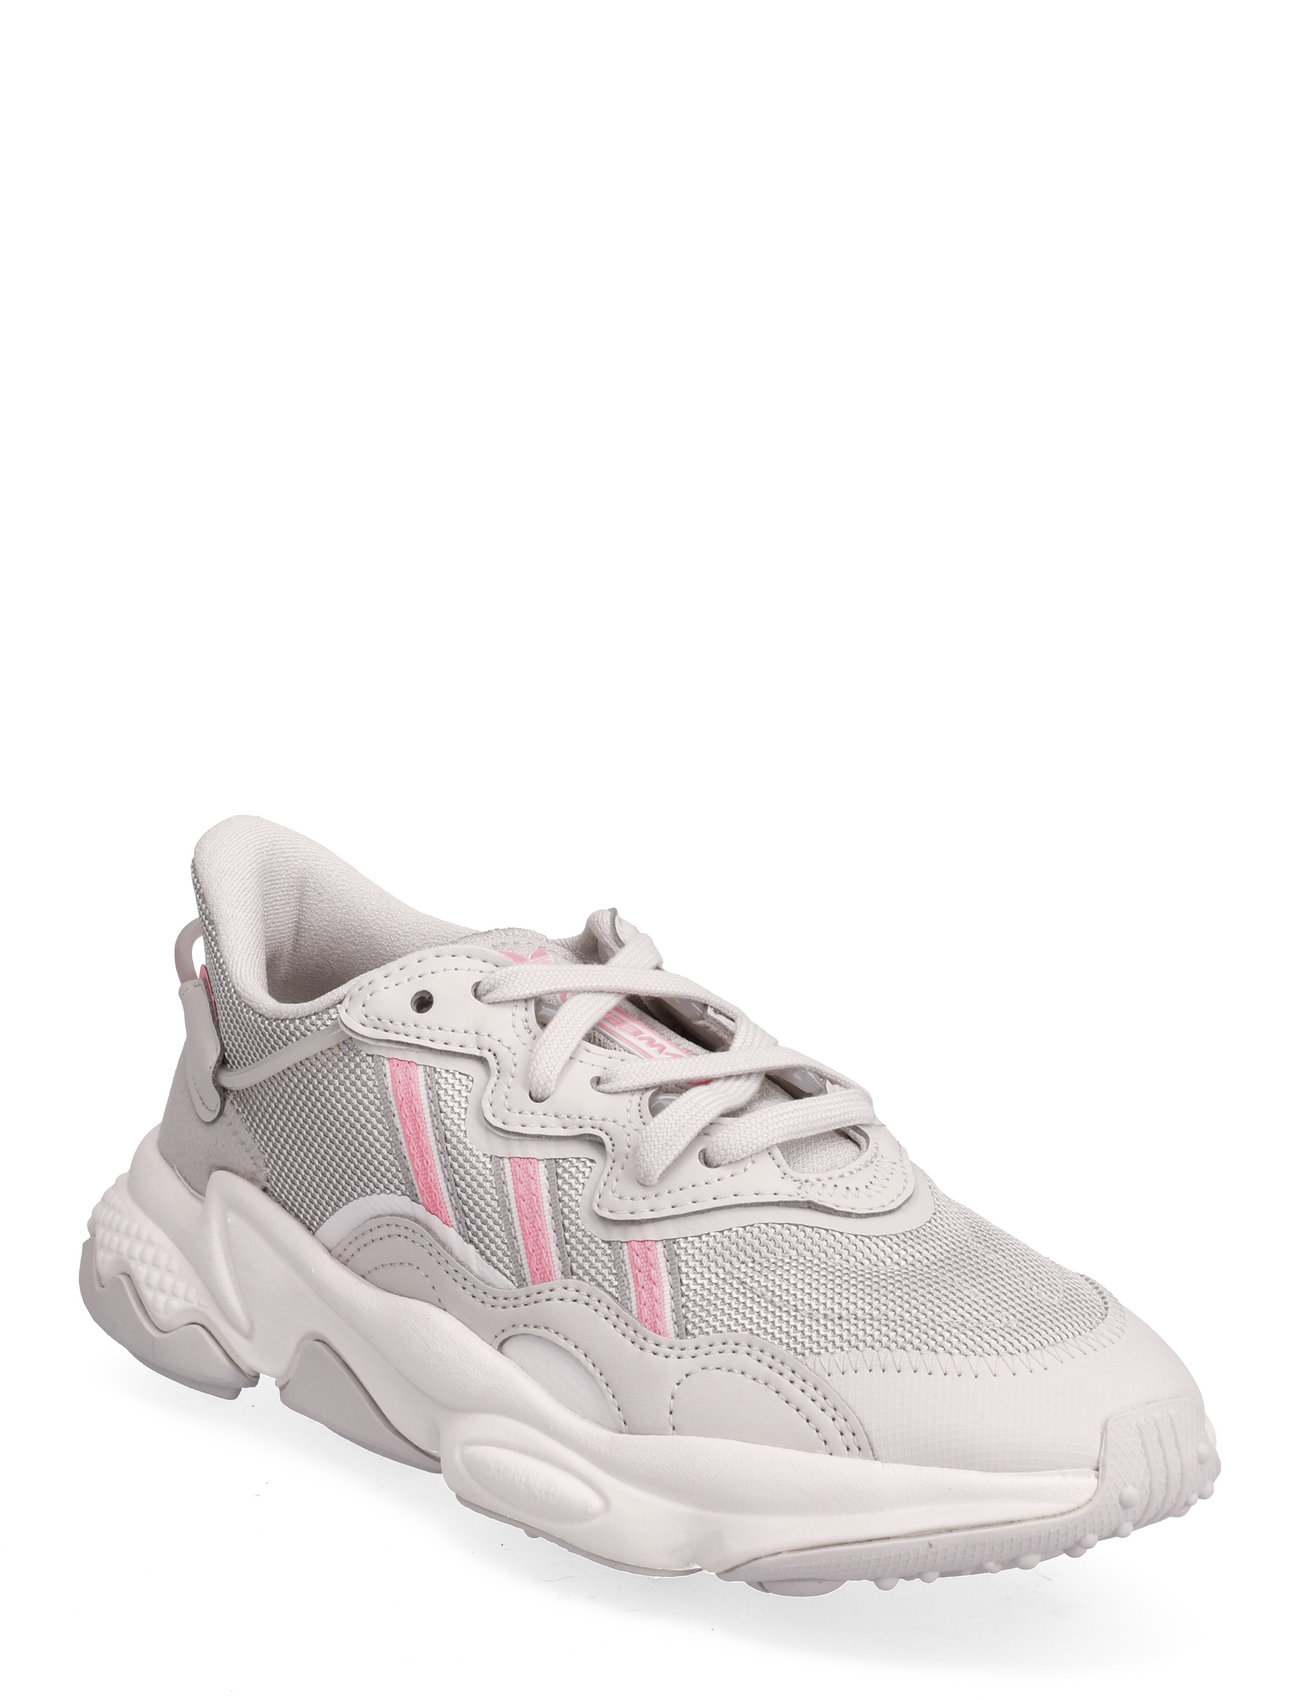 "adidas Originals" "Ozweego Shoes Sport Sneakers Low-top Grey Adidas